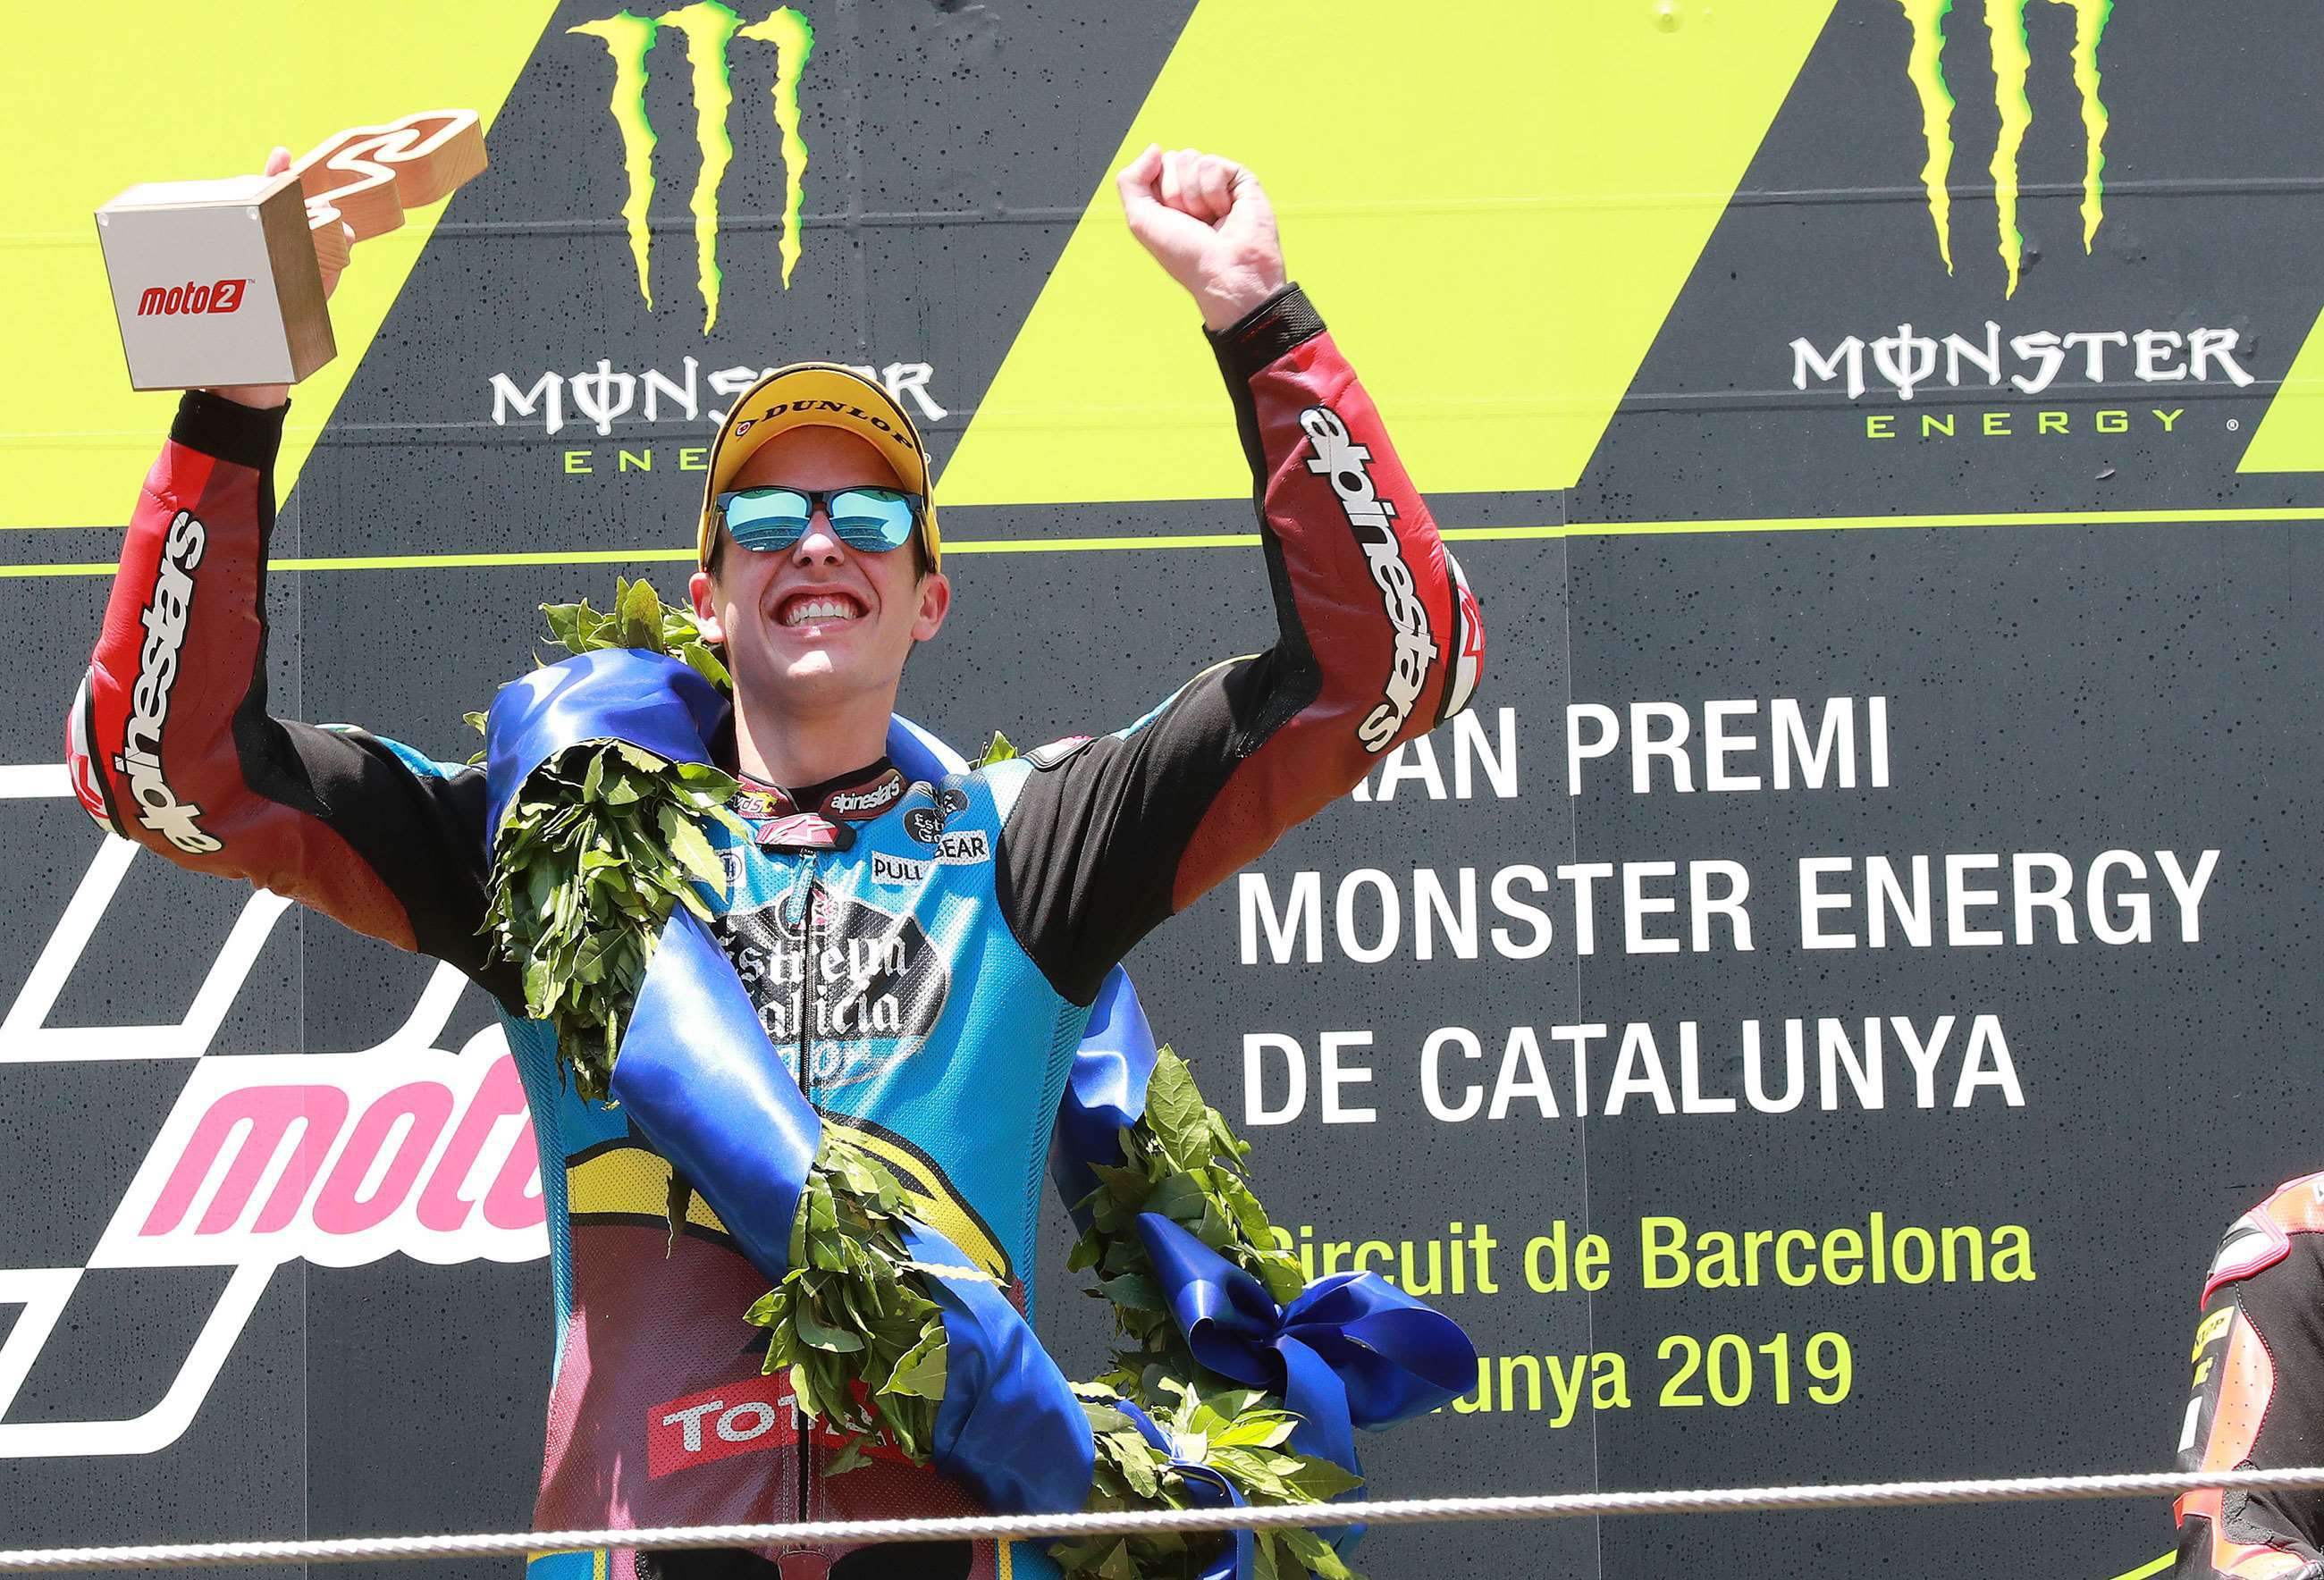 moto2-2019-barcelona-alex-marquez-marc-vds-racing-gold-and-goose-motorsport-images-goodwood-06042020.jpg